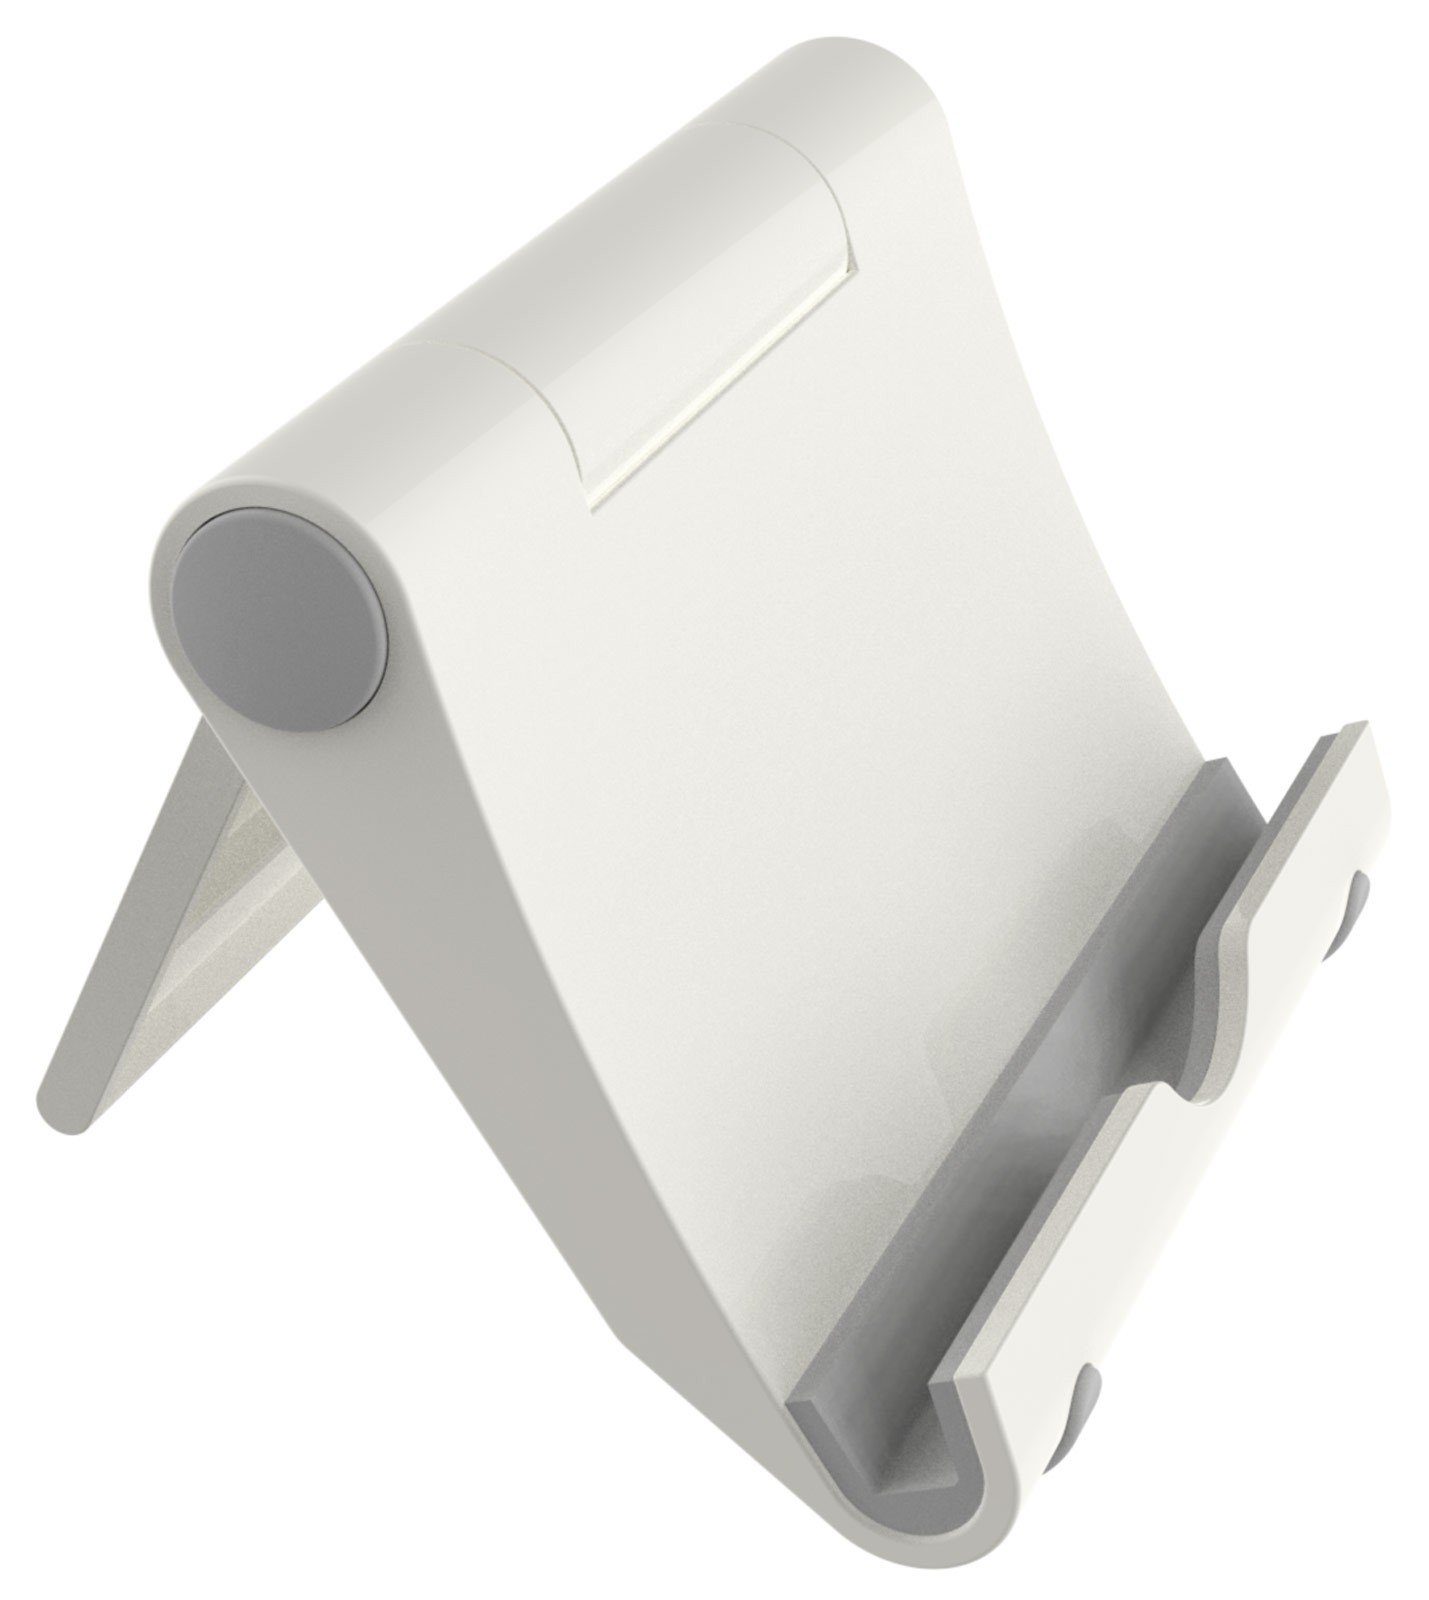 DIIDA Foldable Stand,Smartphone Handy-Halterung,Smartphone Ständer,Smartphone  halterung Tablet-Halterung, grau